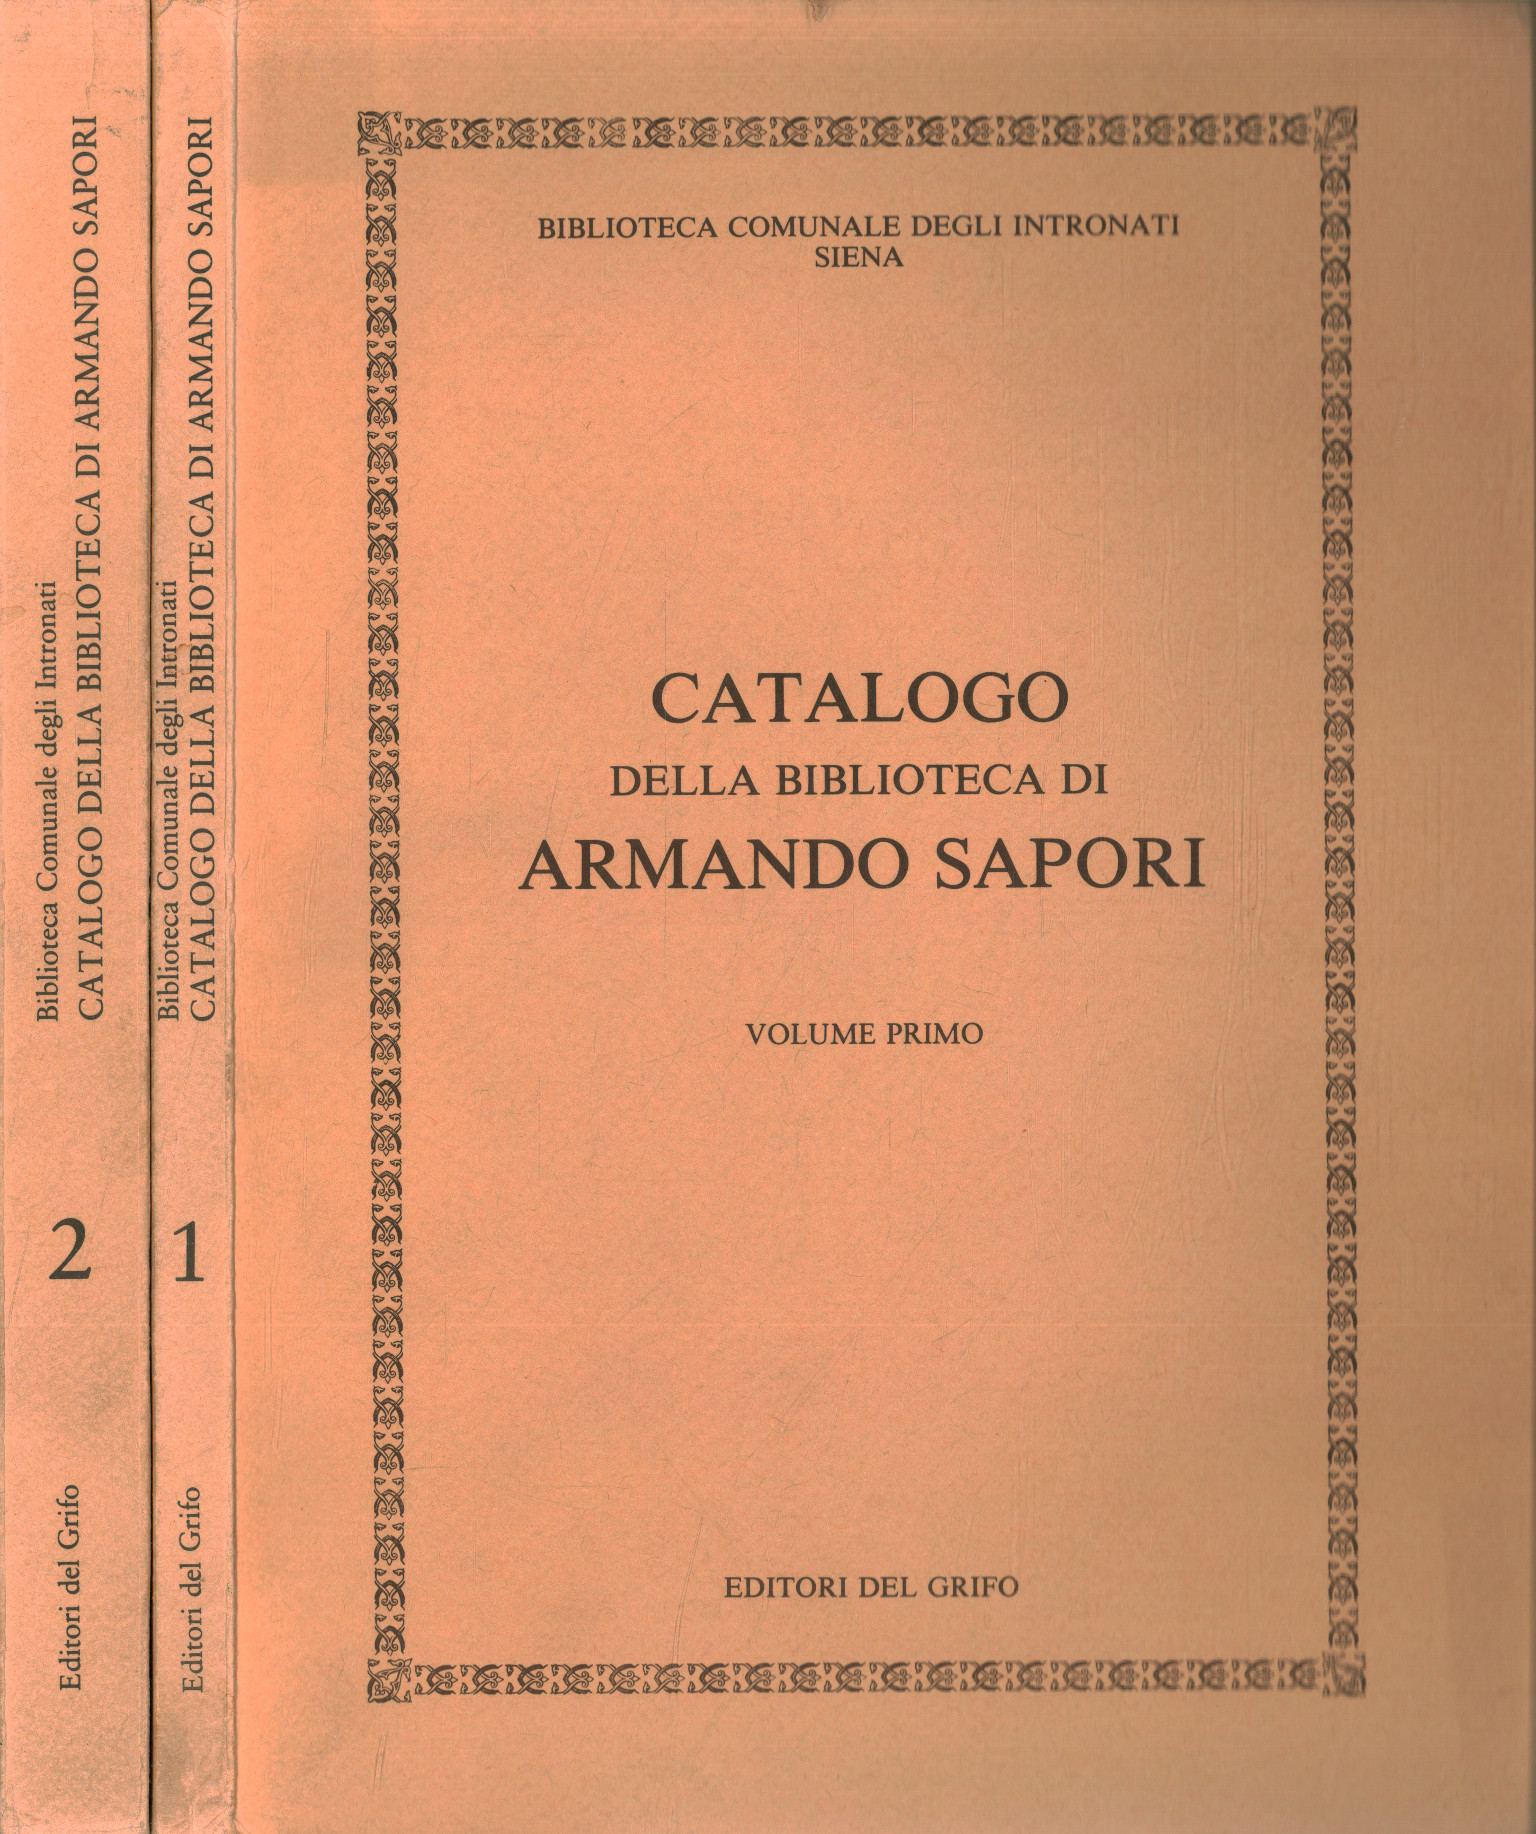 Katalog der Armando Sap-Bibliothek